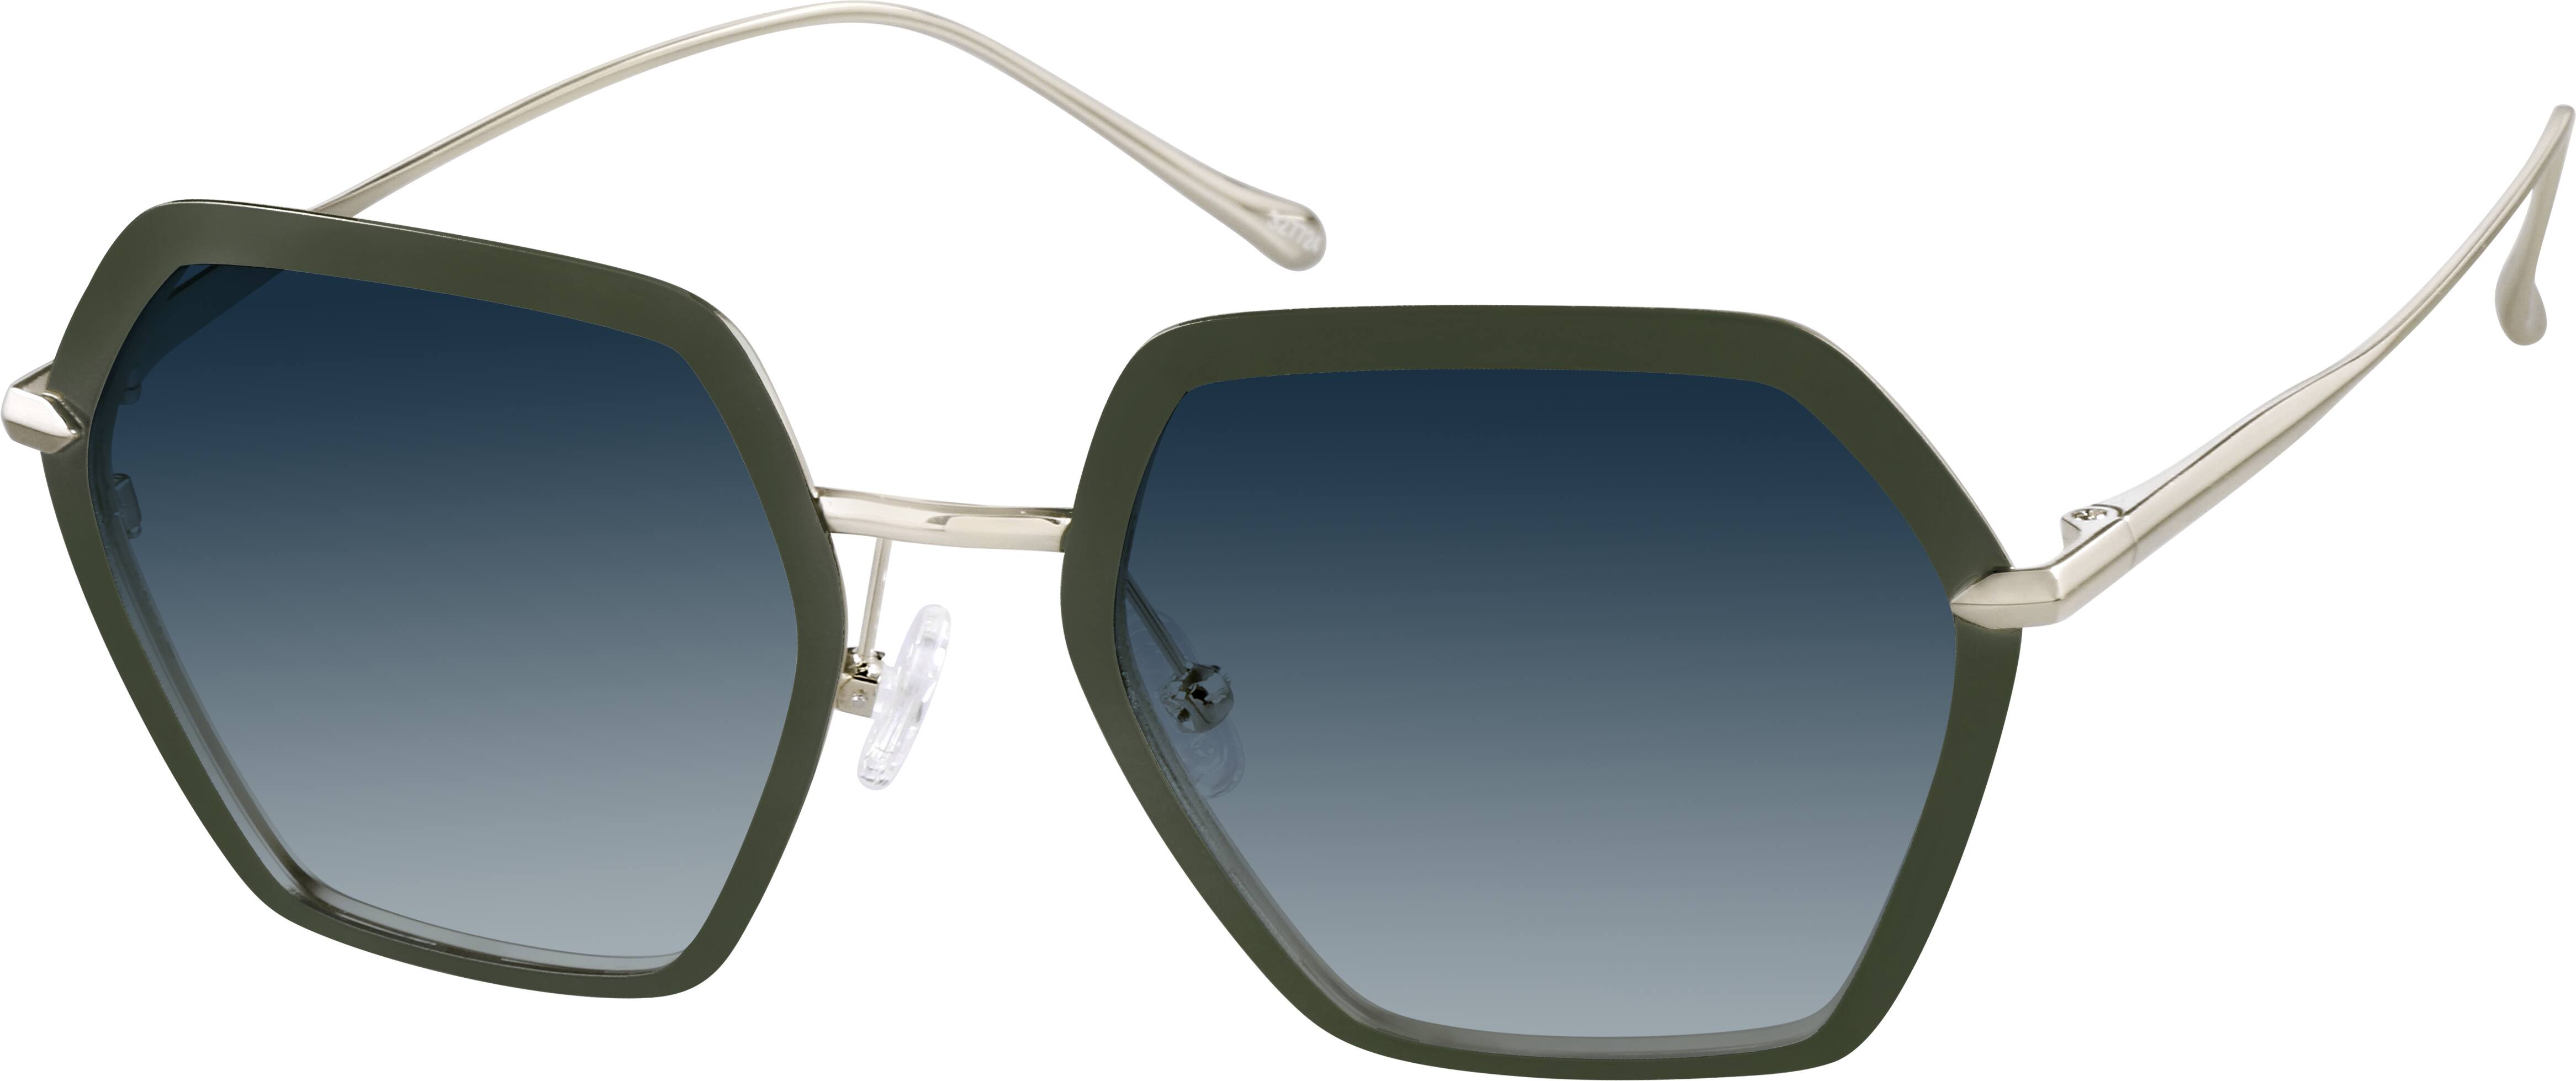 Blue Angular Sunglasses 3277 Zenni Optical Eyeglasses